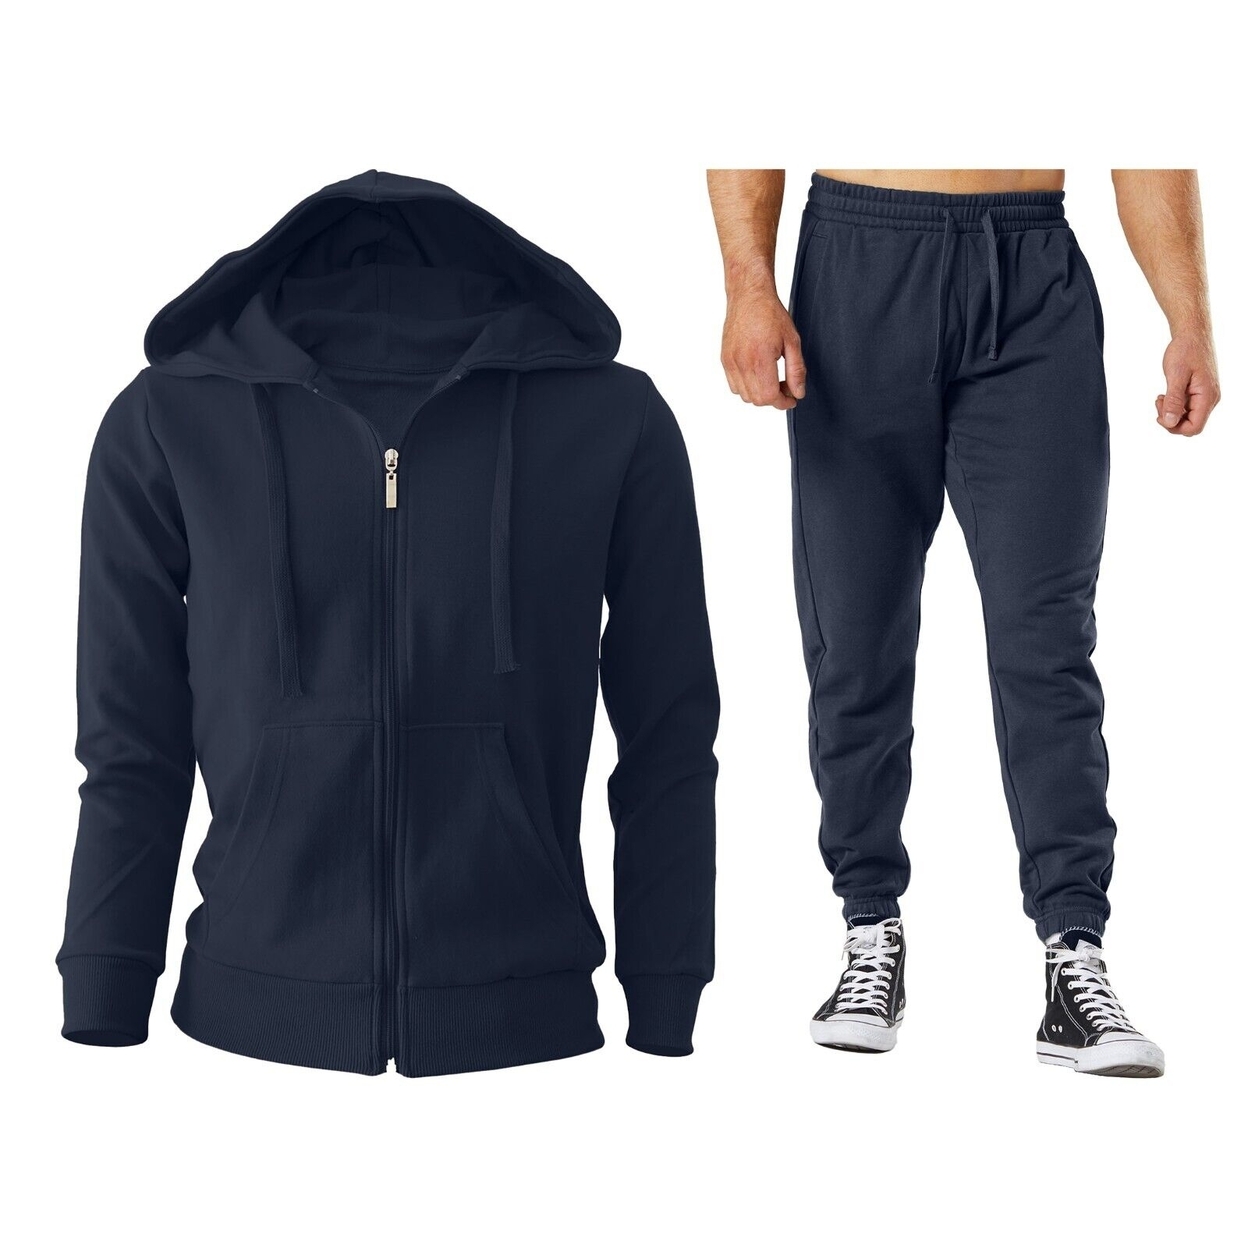 2-Piece: Men's Winter Warm Cozy Athletic Multi-Pockets BIG & TALL Sweatsuit Set - Navy, Xx-large